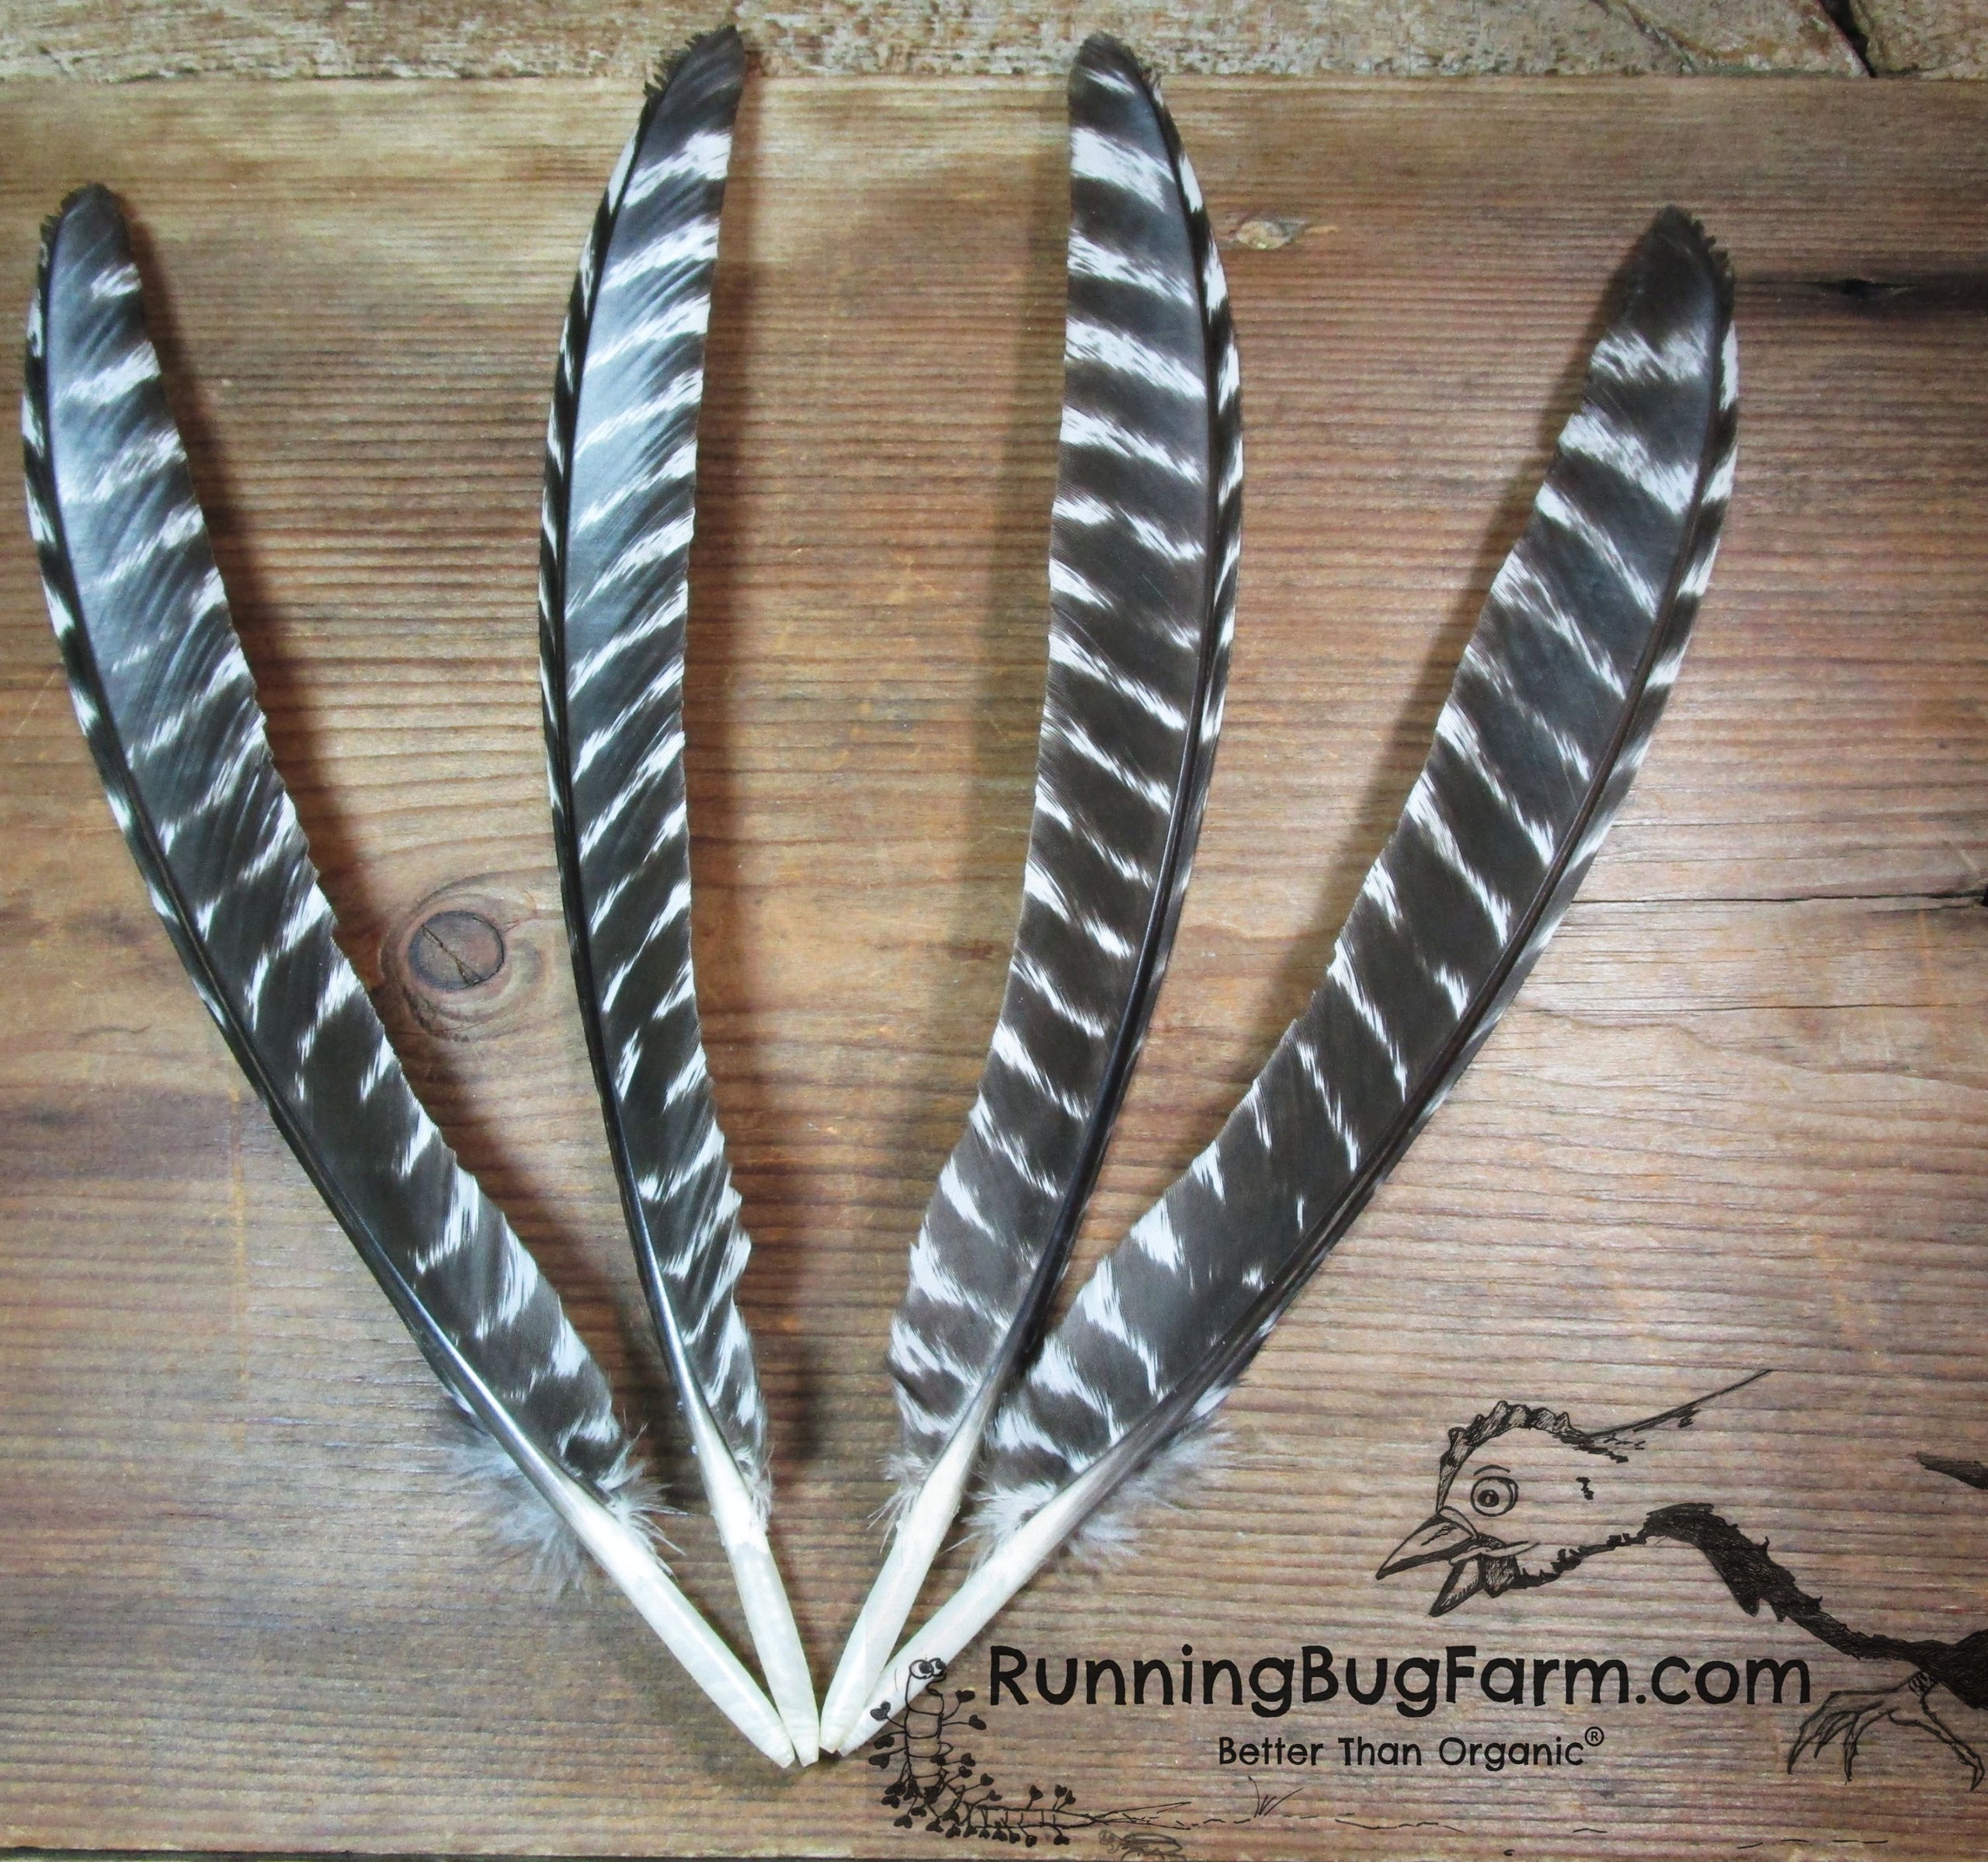 10 Pieces - BLACK BRONZE Wild Turkey Wing Feathers